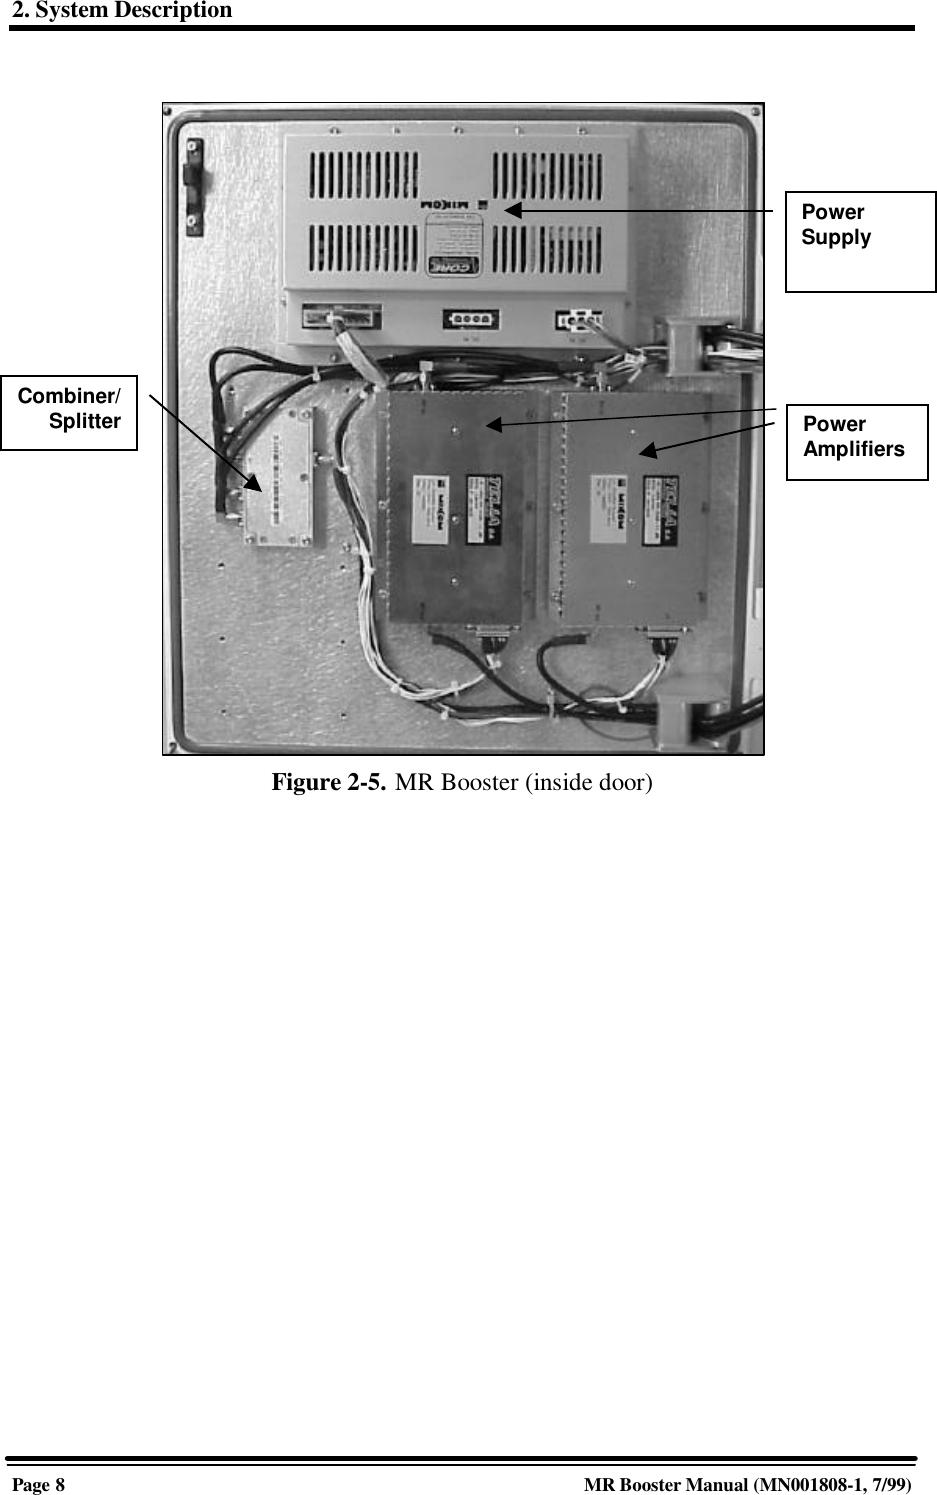 2. System DescriptionPage 8MR Booster Manual (MN001808-1, 7/99)Figure 2-5. MR Booster (inside door)PowerSupplyPowerAmplifiersCombiner/Splitter